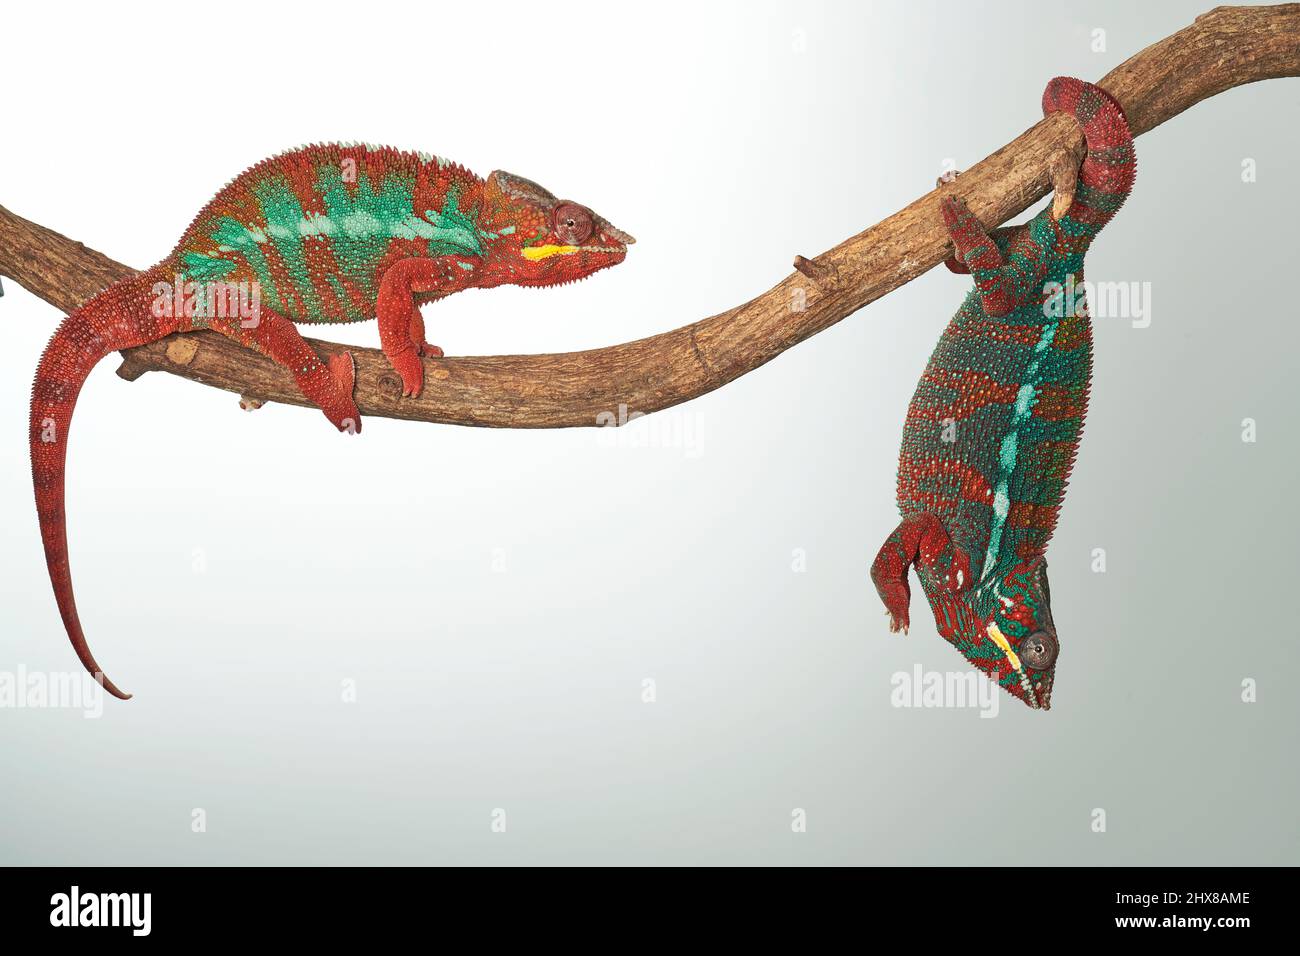 Panther chameleon, Furcifer pardalis, maschio sottomesso (destra) dà il posto al maschio dominante (sinistra). Il colore del maschio sottomesso si sbiadisce, il colore dominante del maschio si illumina. Foto Stock